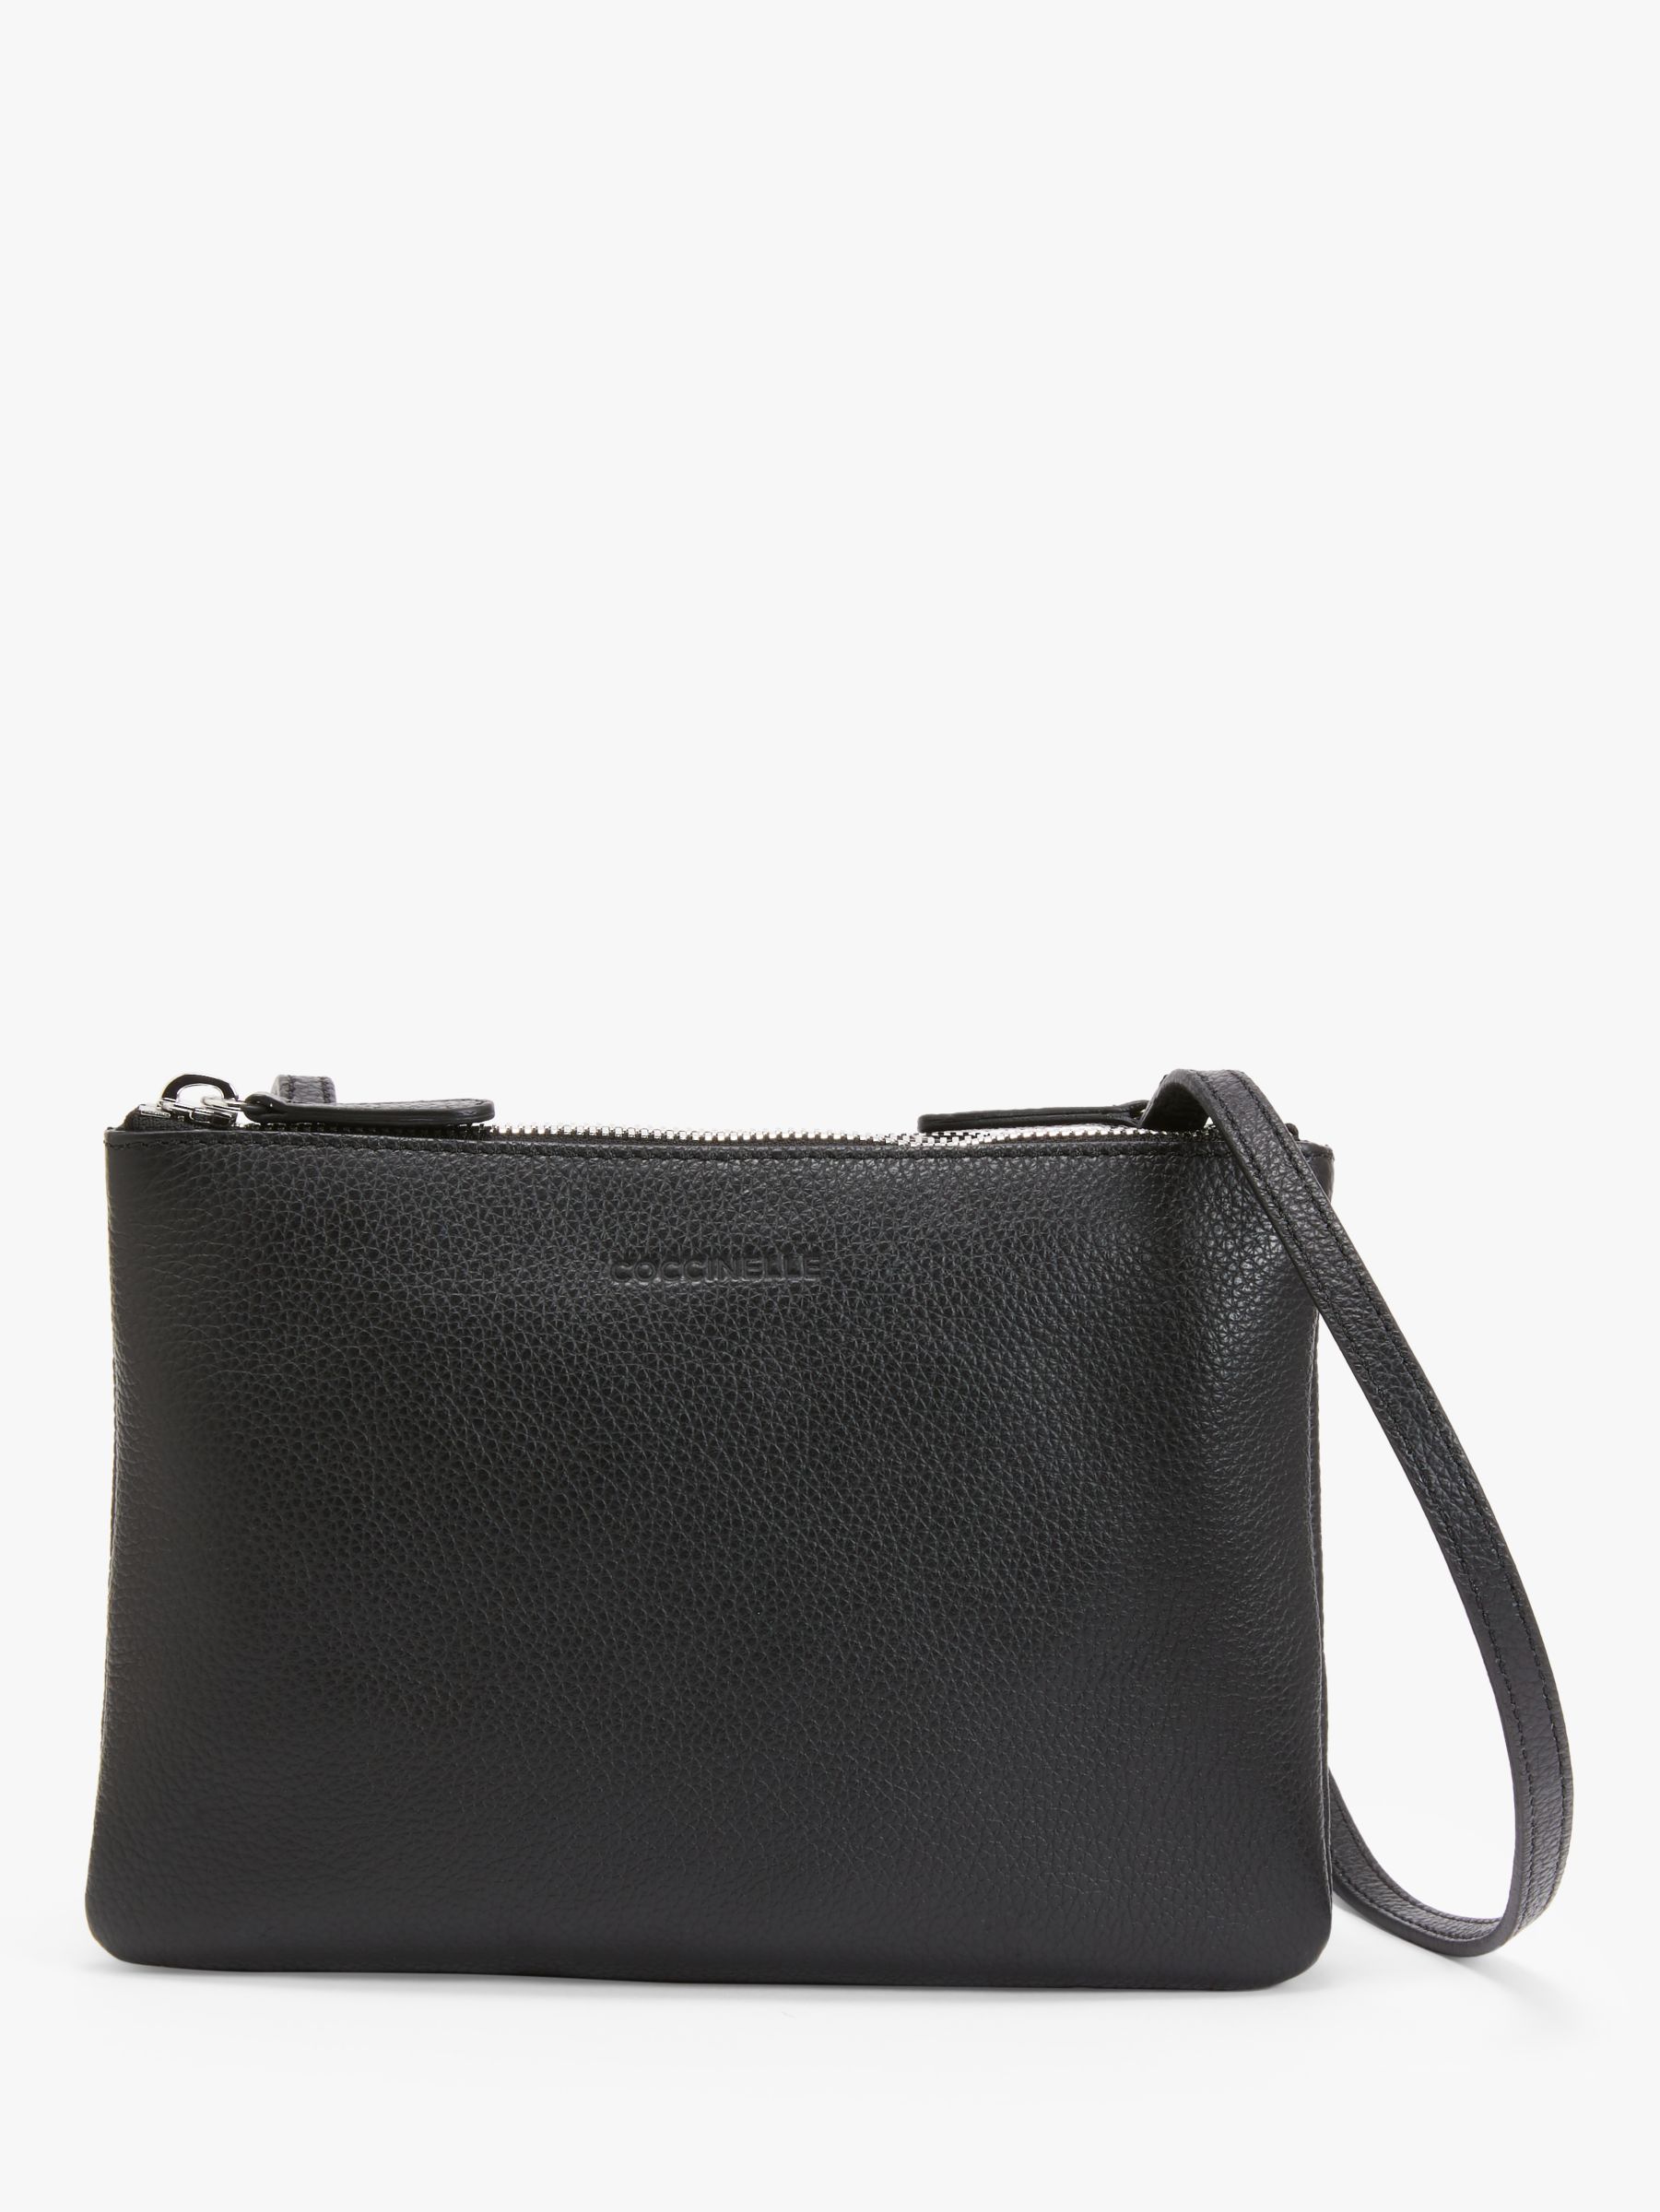 Coccinelle Coralie Leather Mini Bag, Black